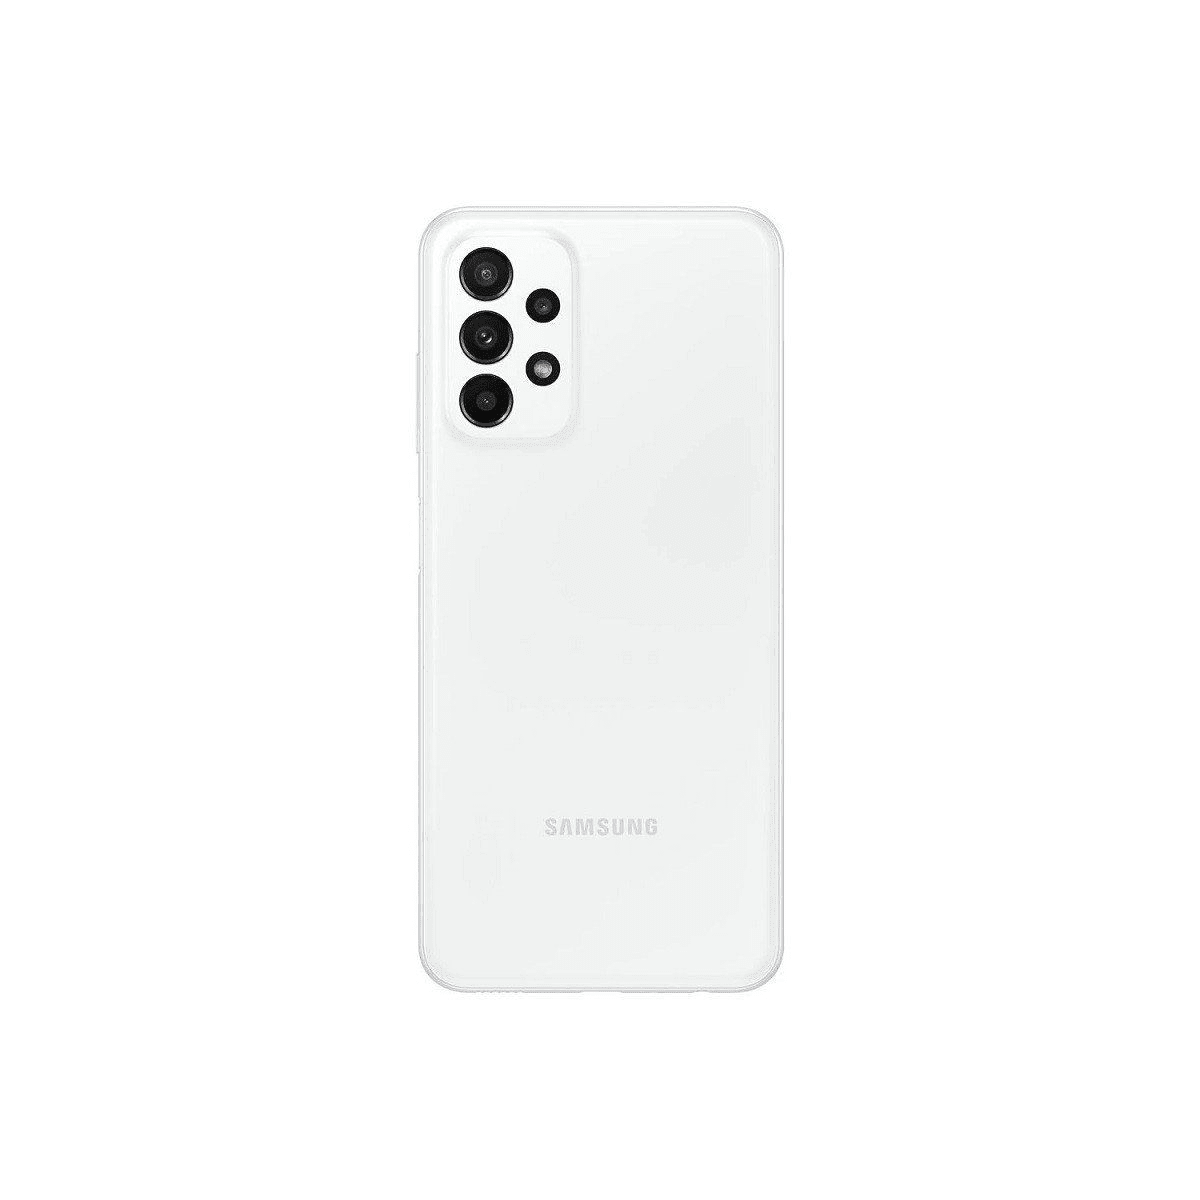 GB DS white 64GB 5G SIM Galaxy A23 Weiss Dual 64 SAMSUNG